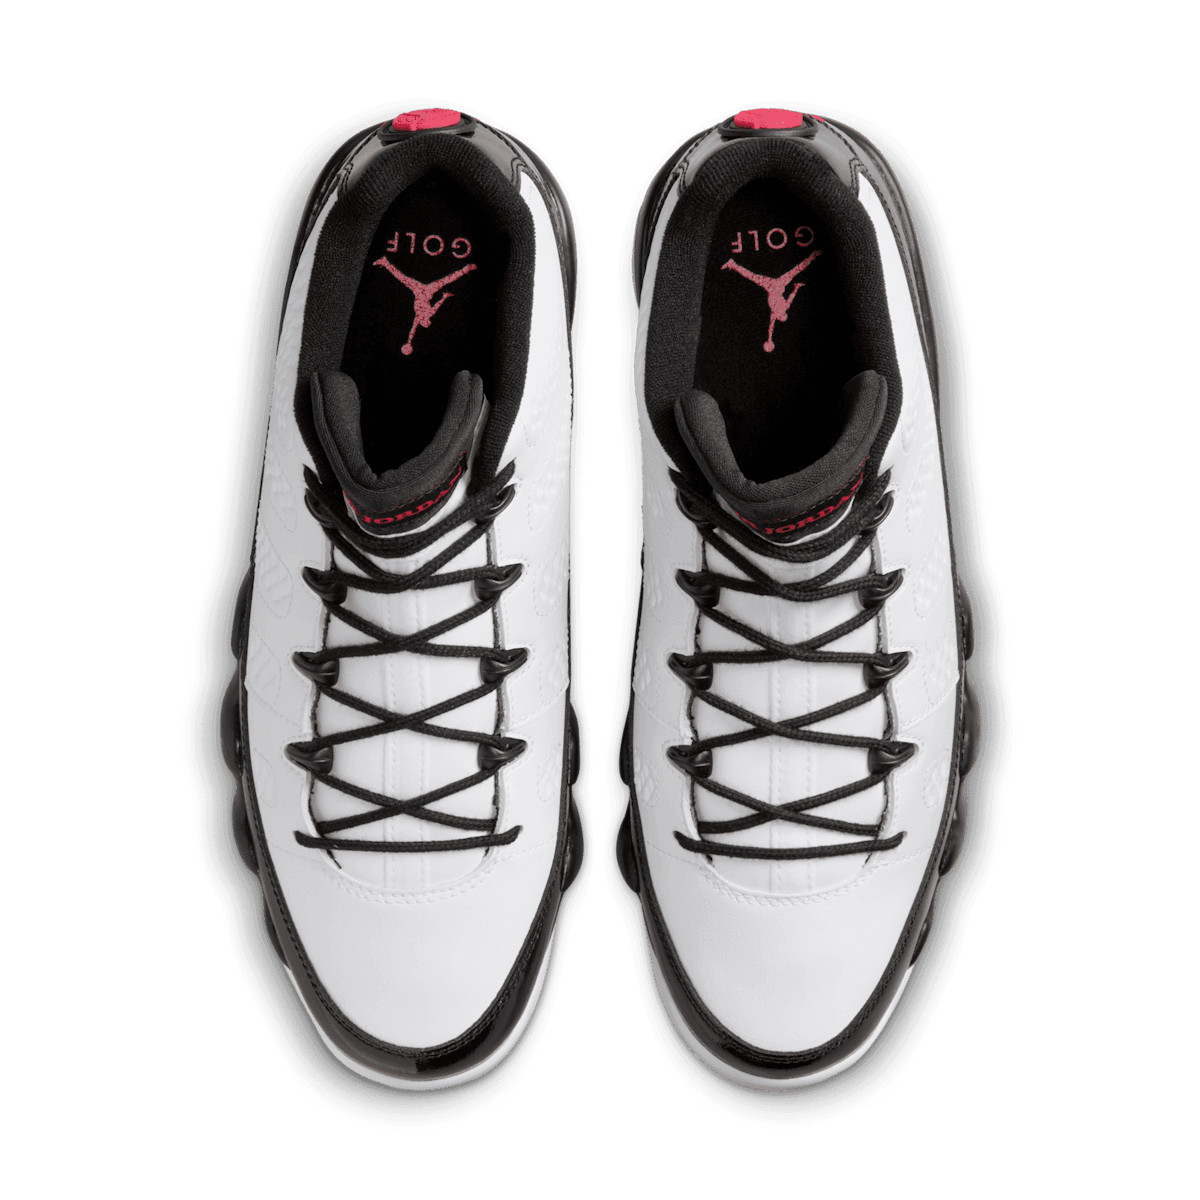 Air Jordan 9 Golf White Black Angle 1